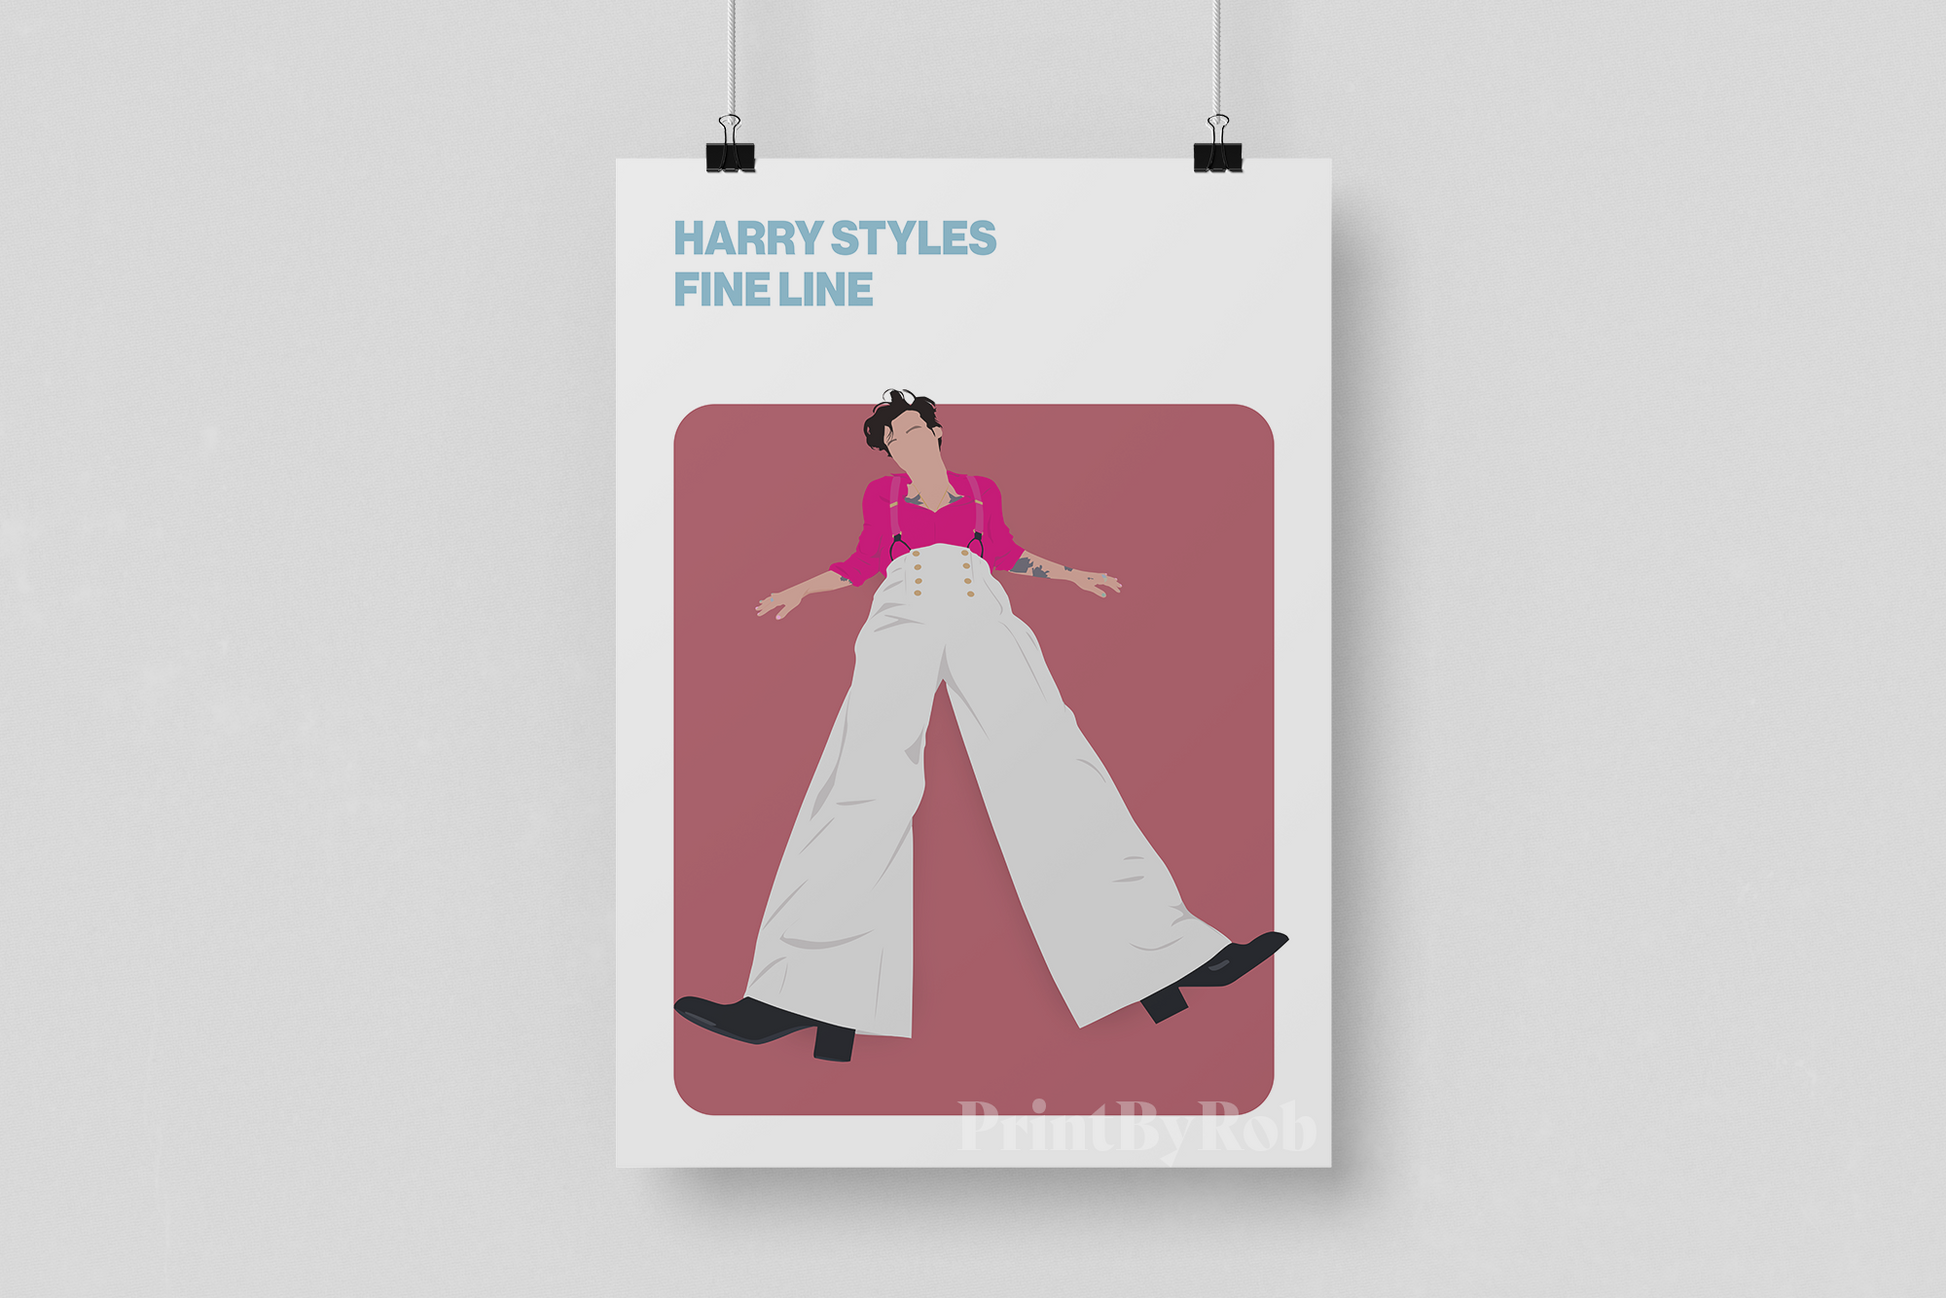 Harry Styles ‎– Fine Line (2 LP + Poster) 